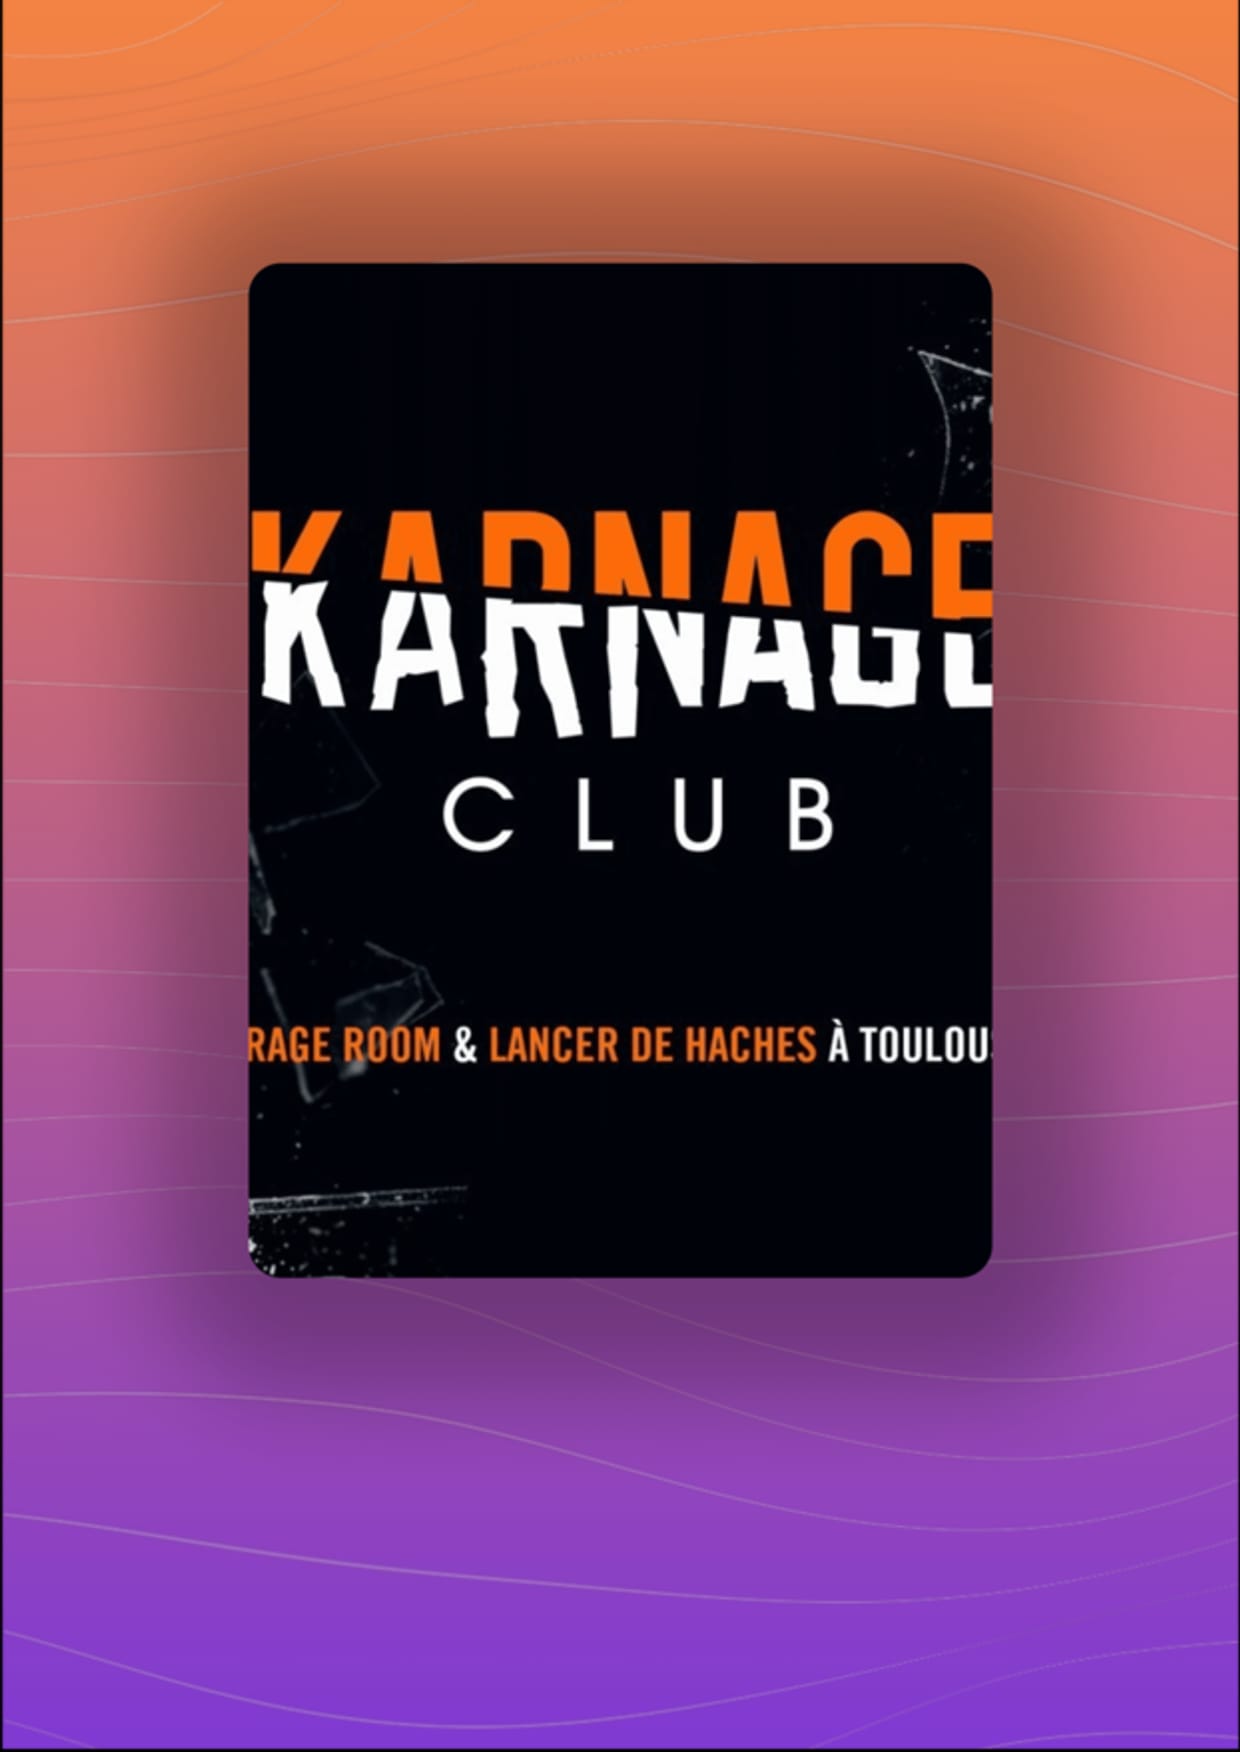 Karnage Club | -20%